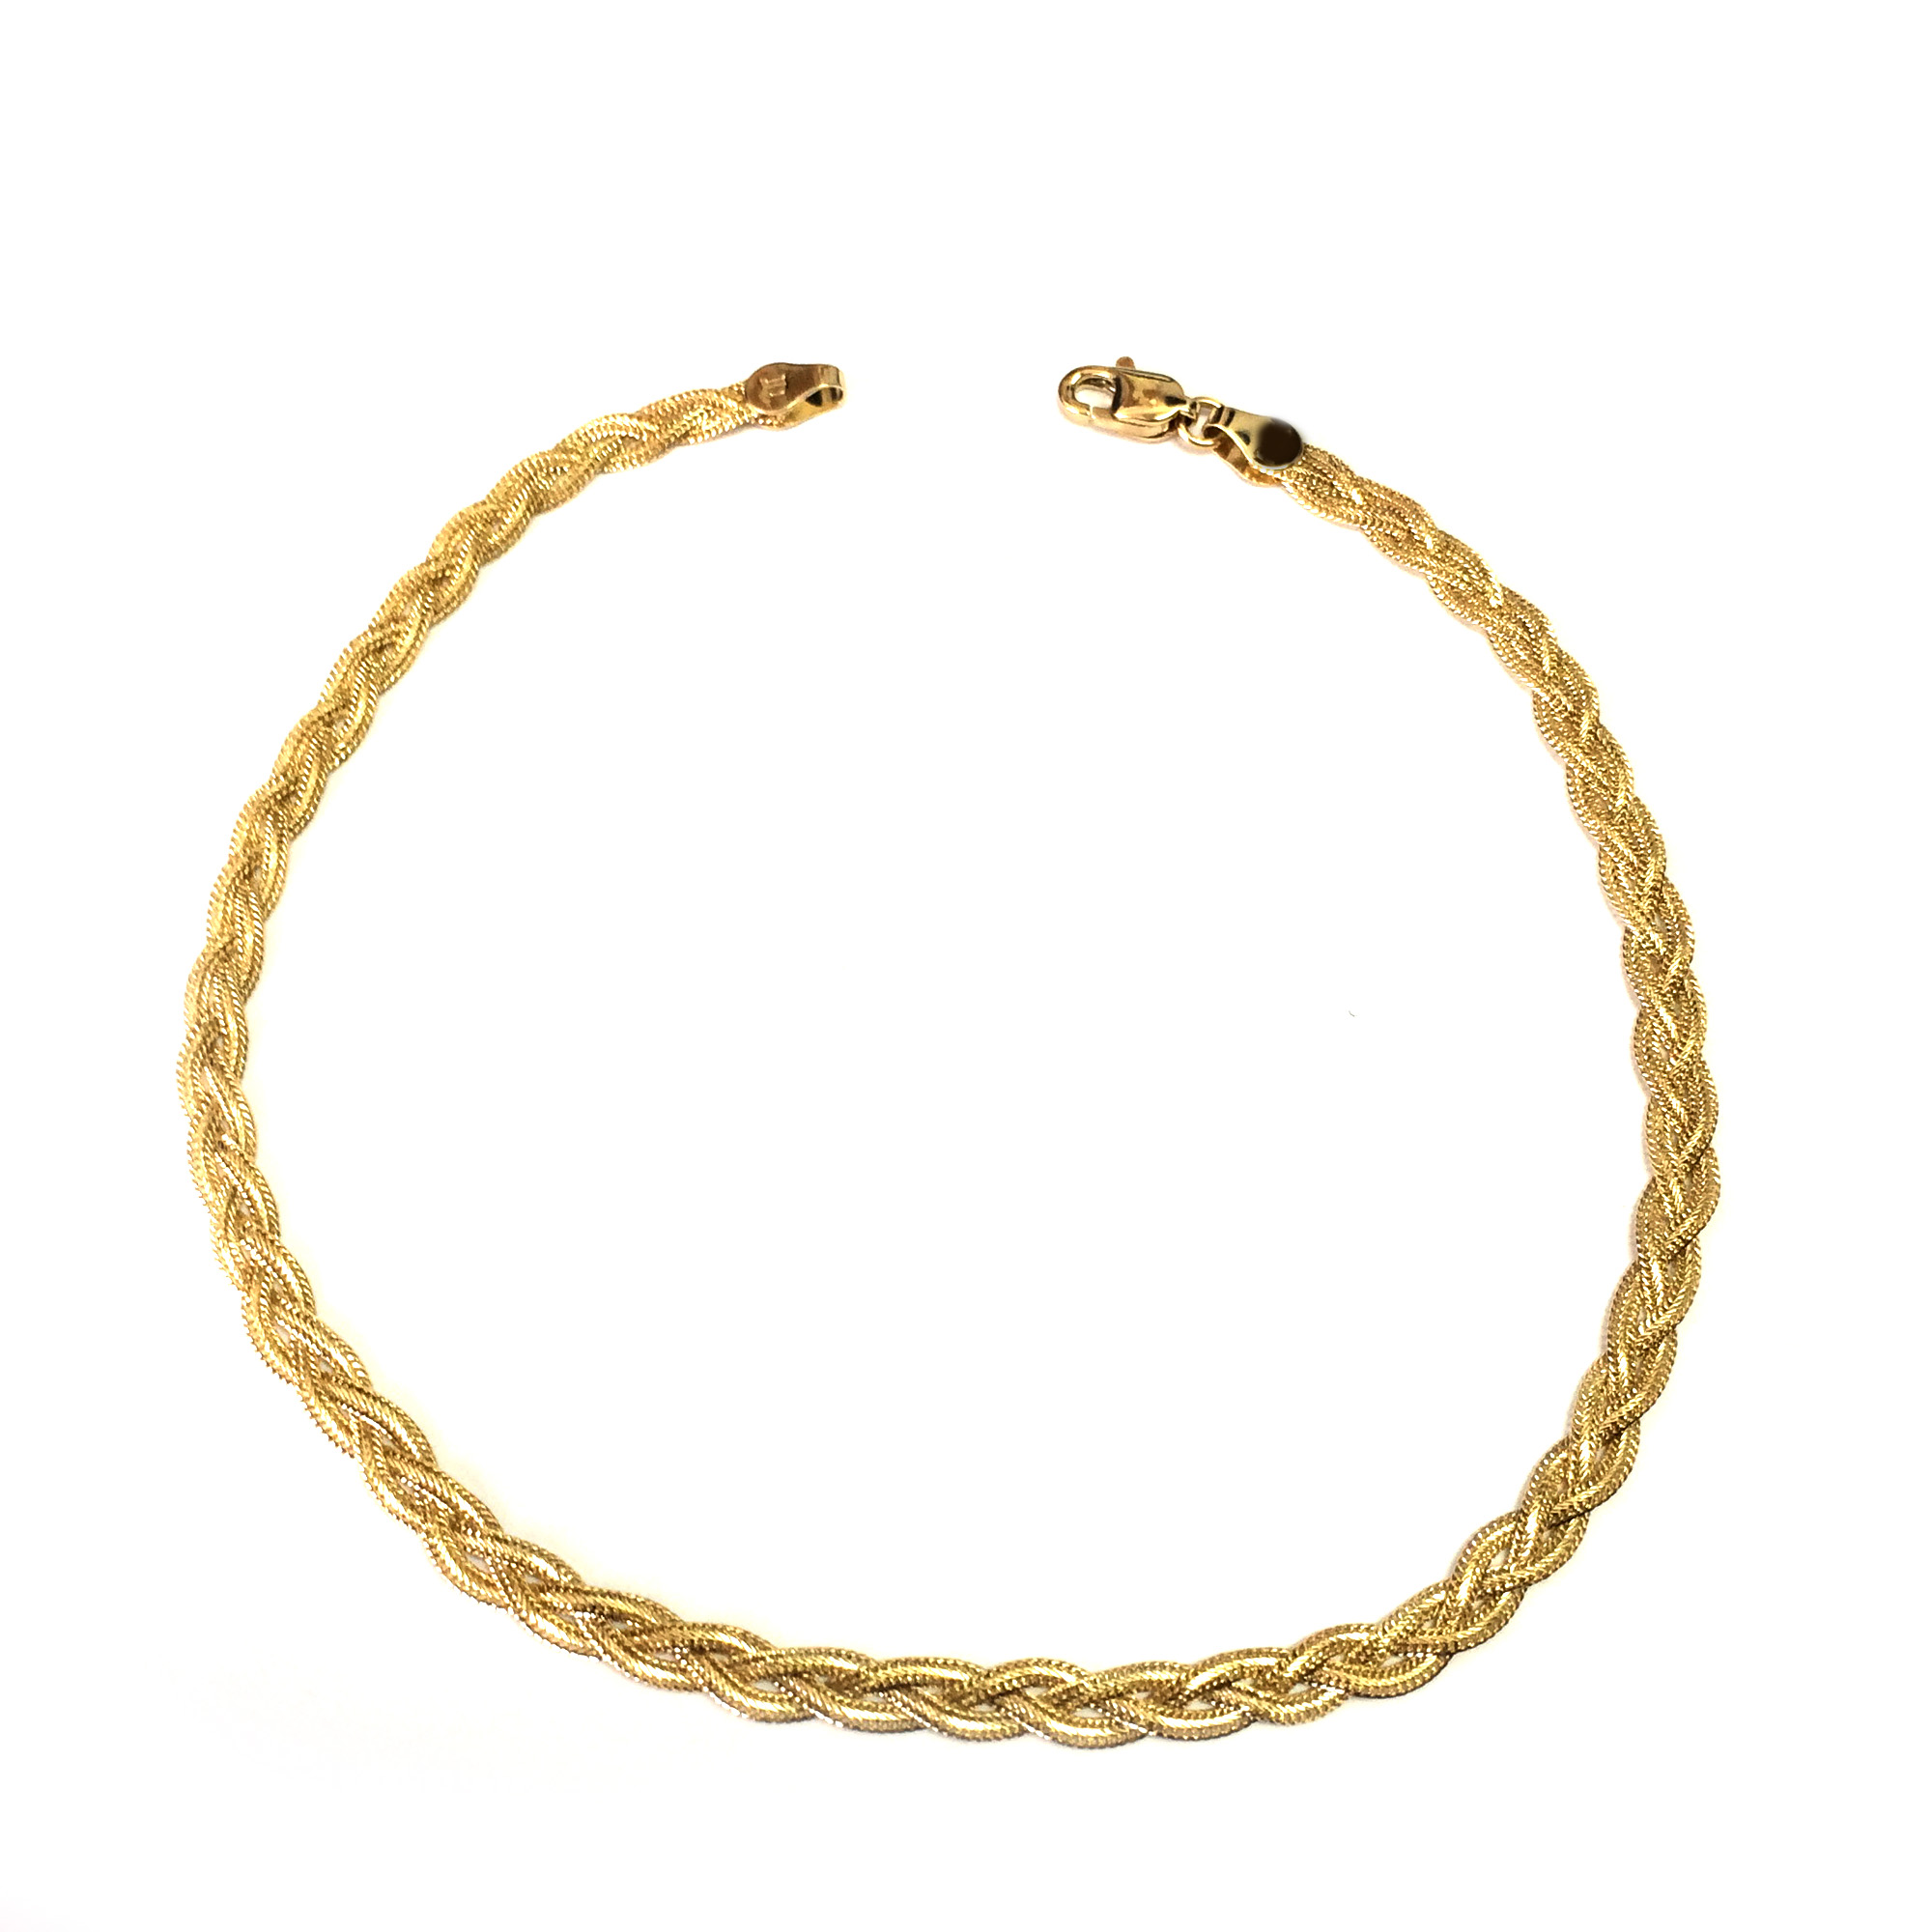 Jewelry Affairs 14K Yellow Gold Diamond Cut Braided Fox Chain Anklet, 10"